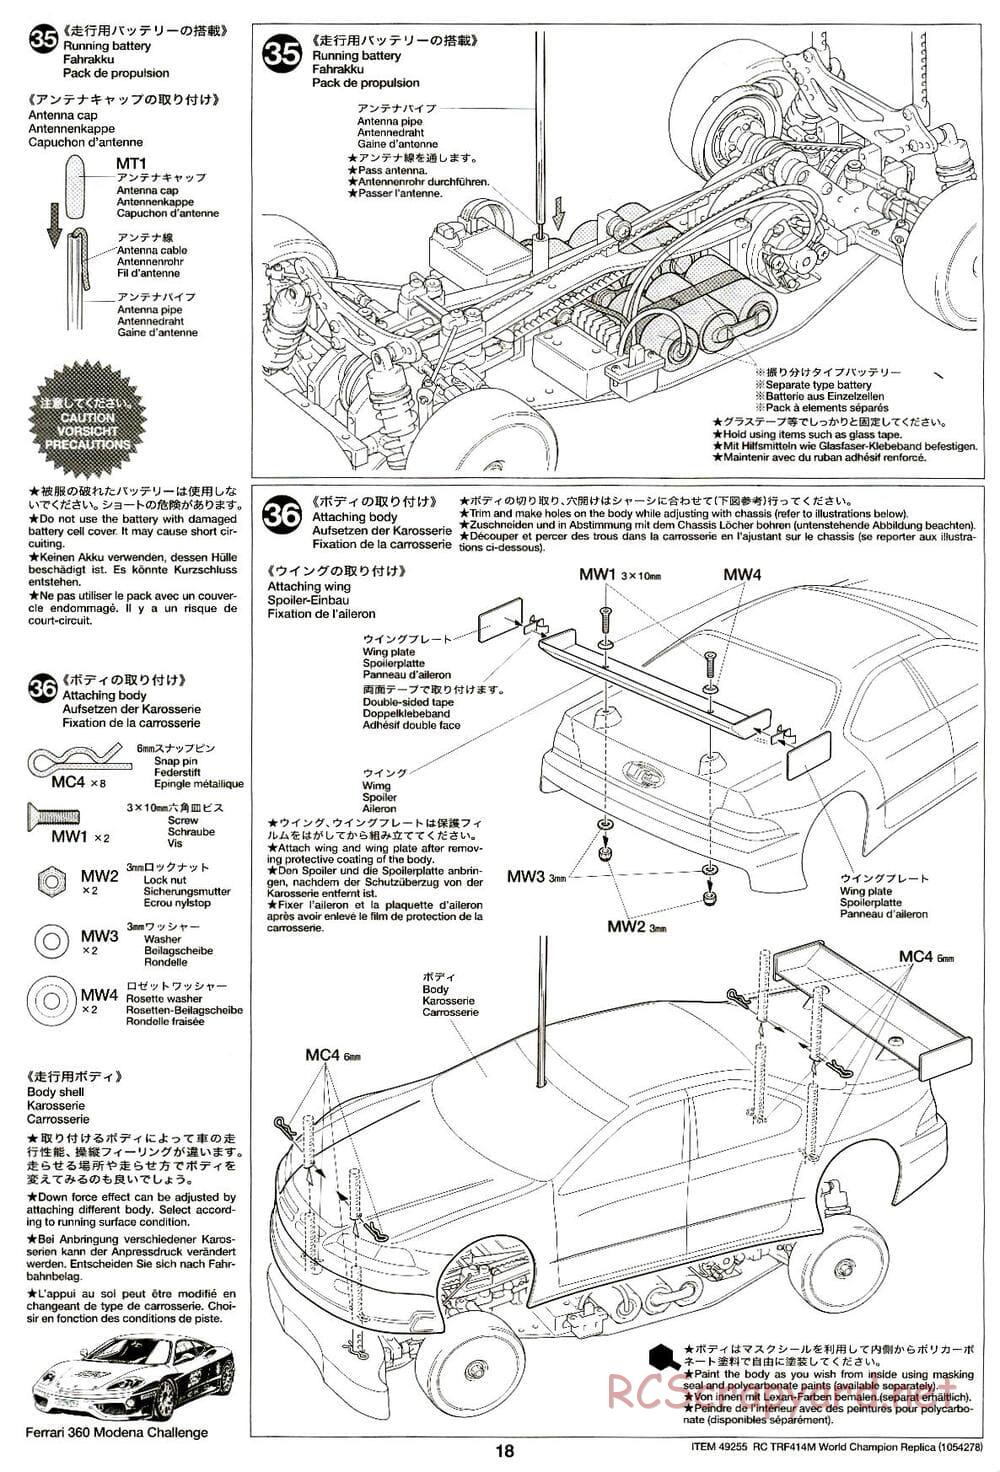 Tamiya - TRF414M World Champion Replica Chassis - Manual - Page 18